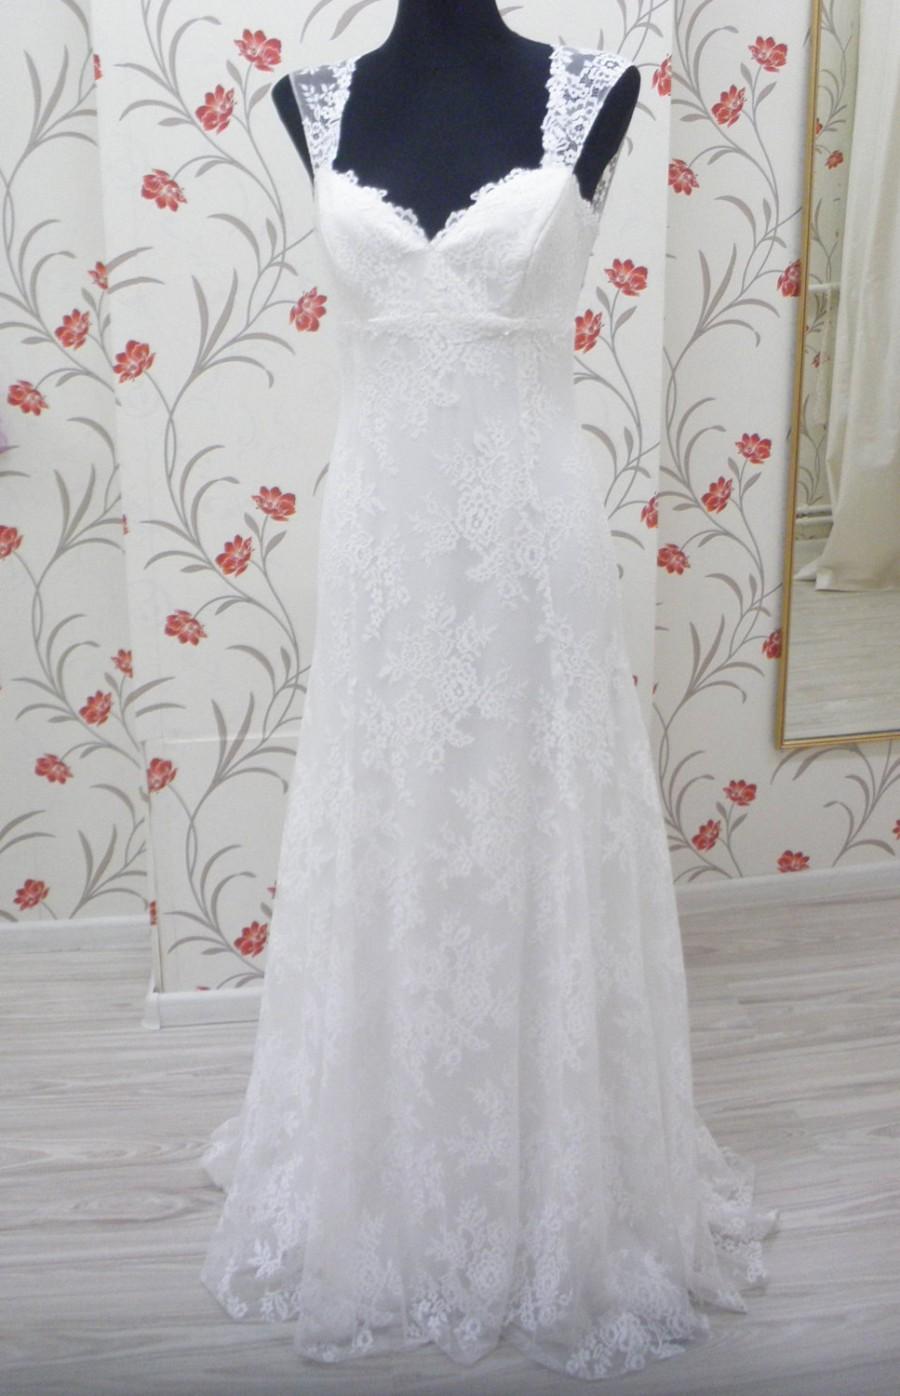 زفاف - Boho Lace Wedding Dress Bohemian Style Vintage Inspired with Open Back, Sweetheart Neckline and Long Lace Train